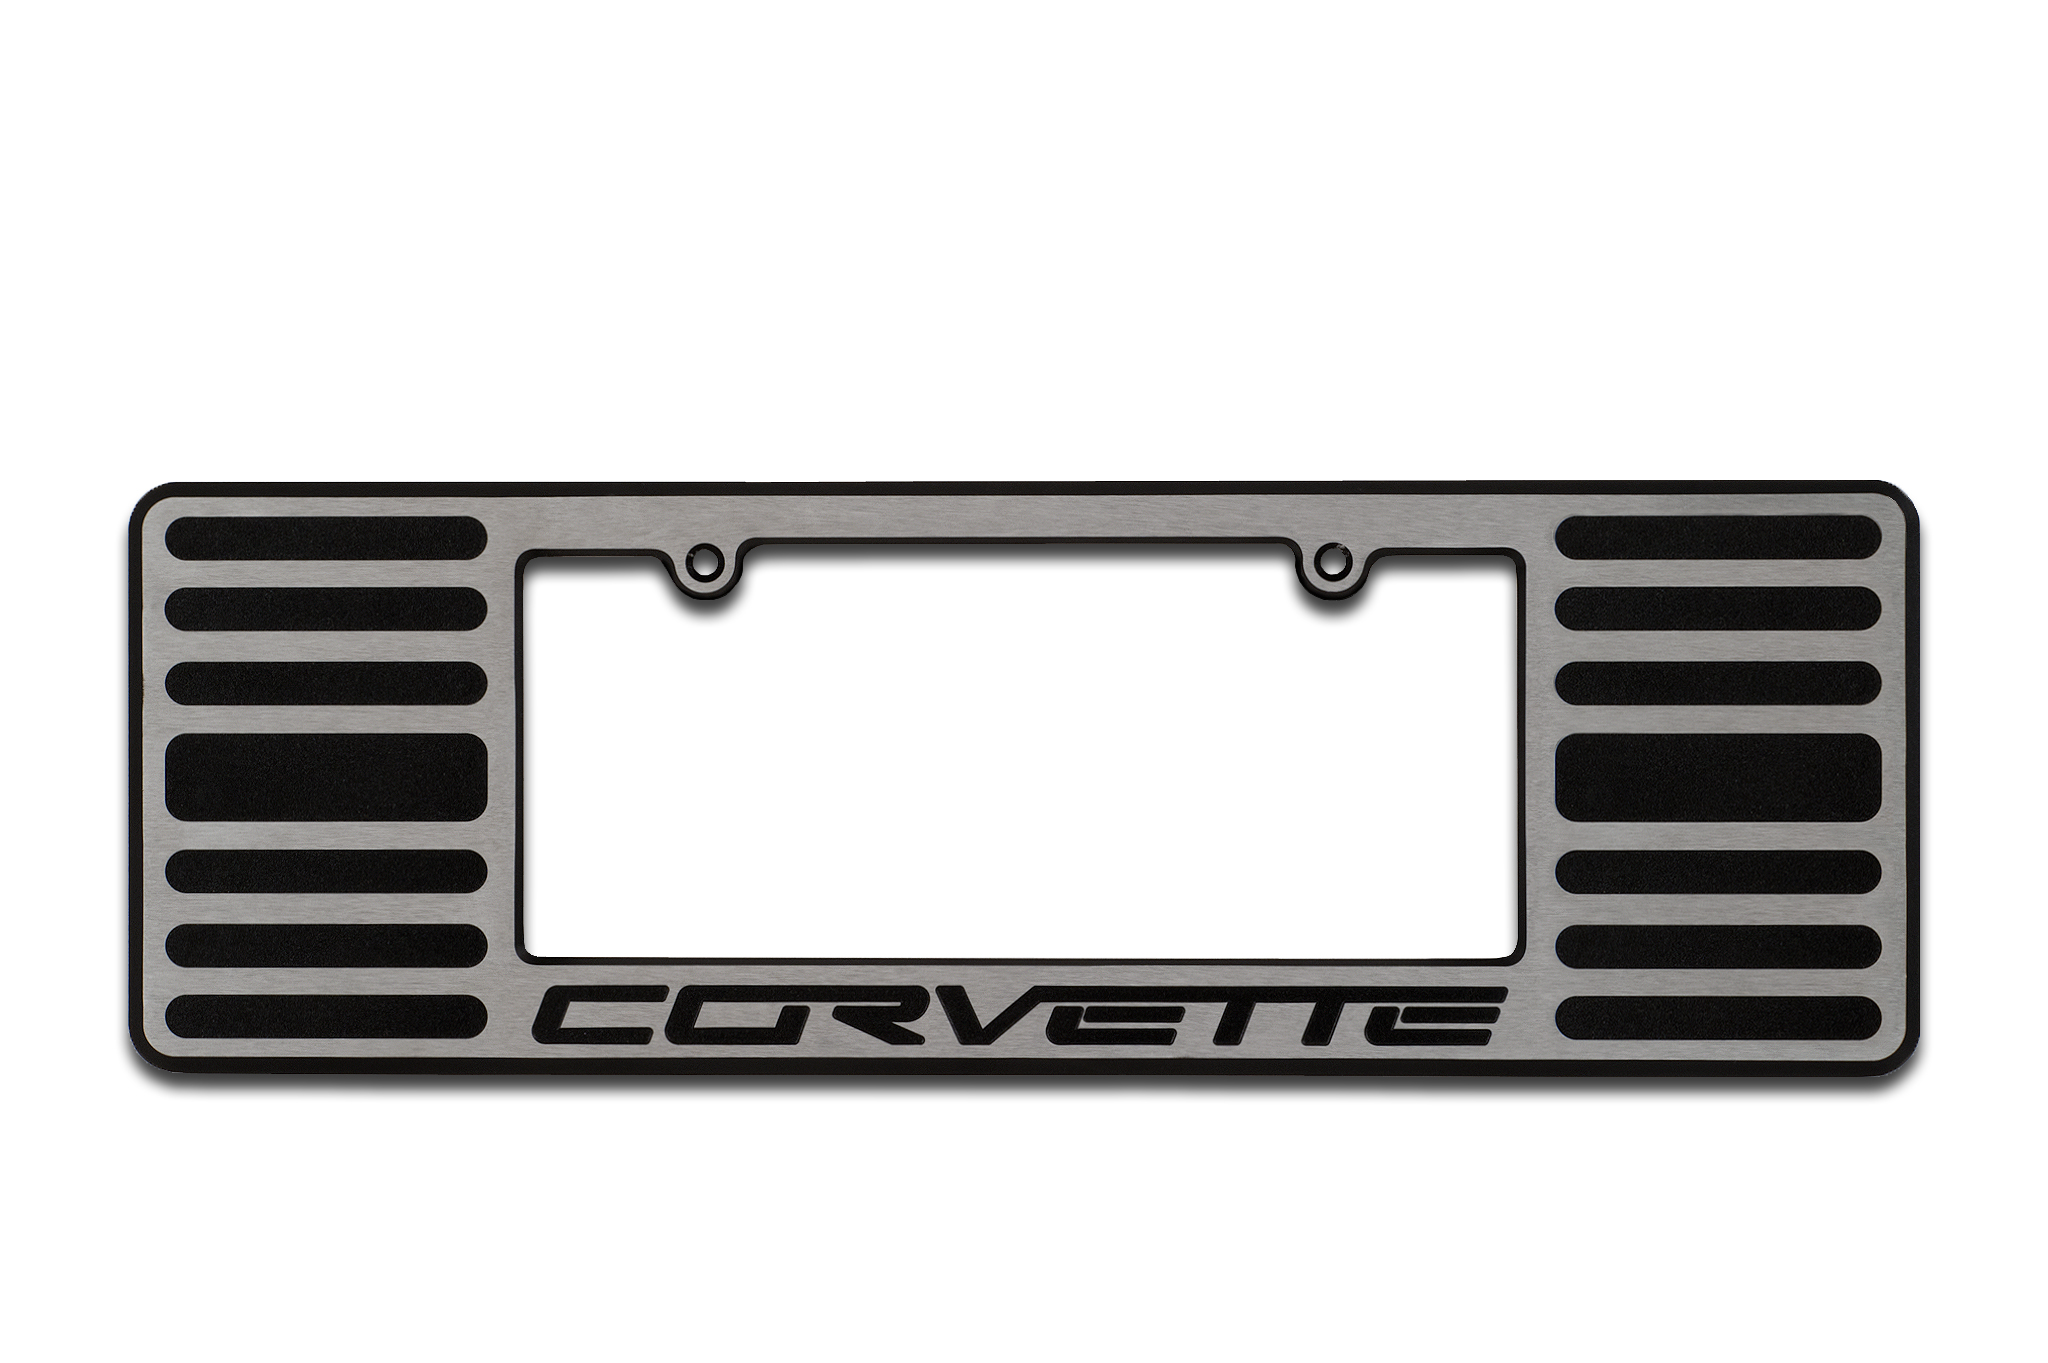 Corvette Wide License Plate Frame w/ "Corvette" Logo Engraved on Surface Two Tone